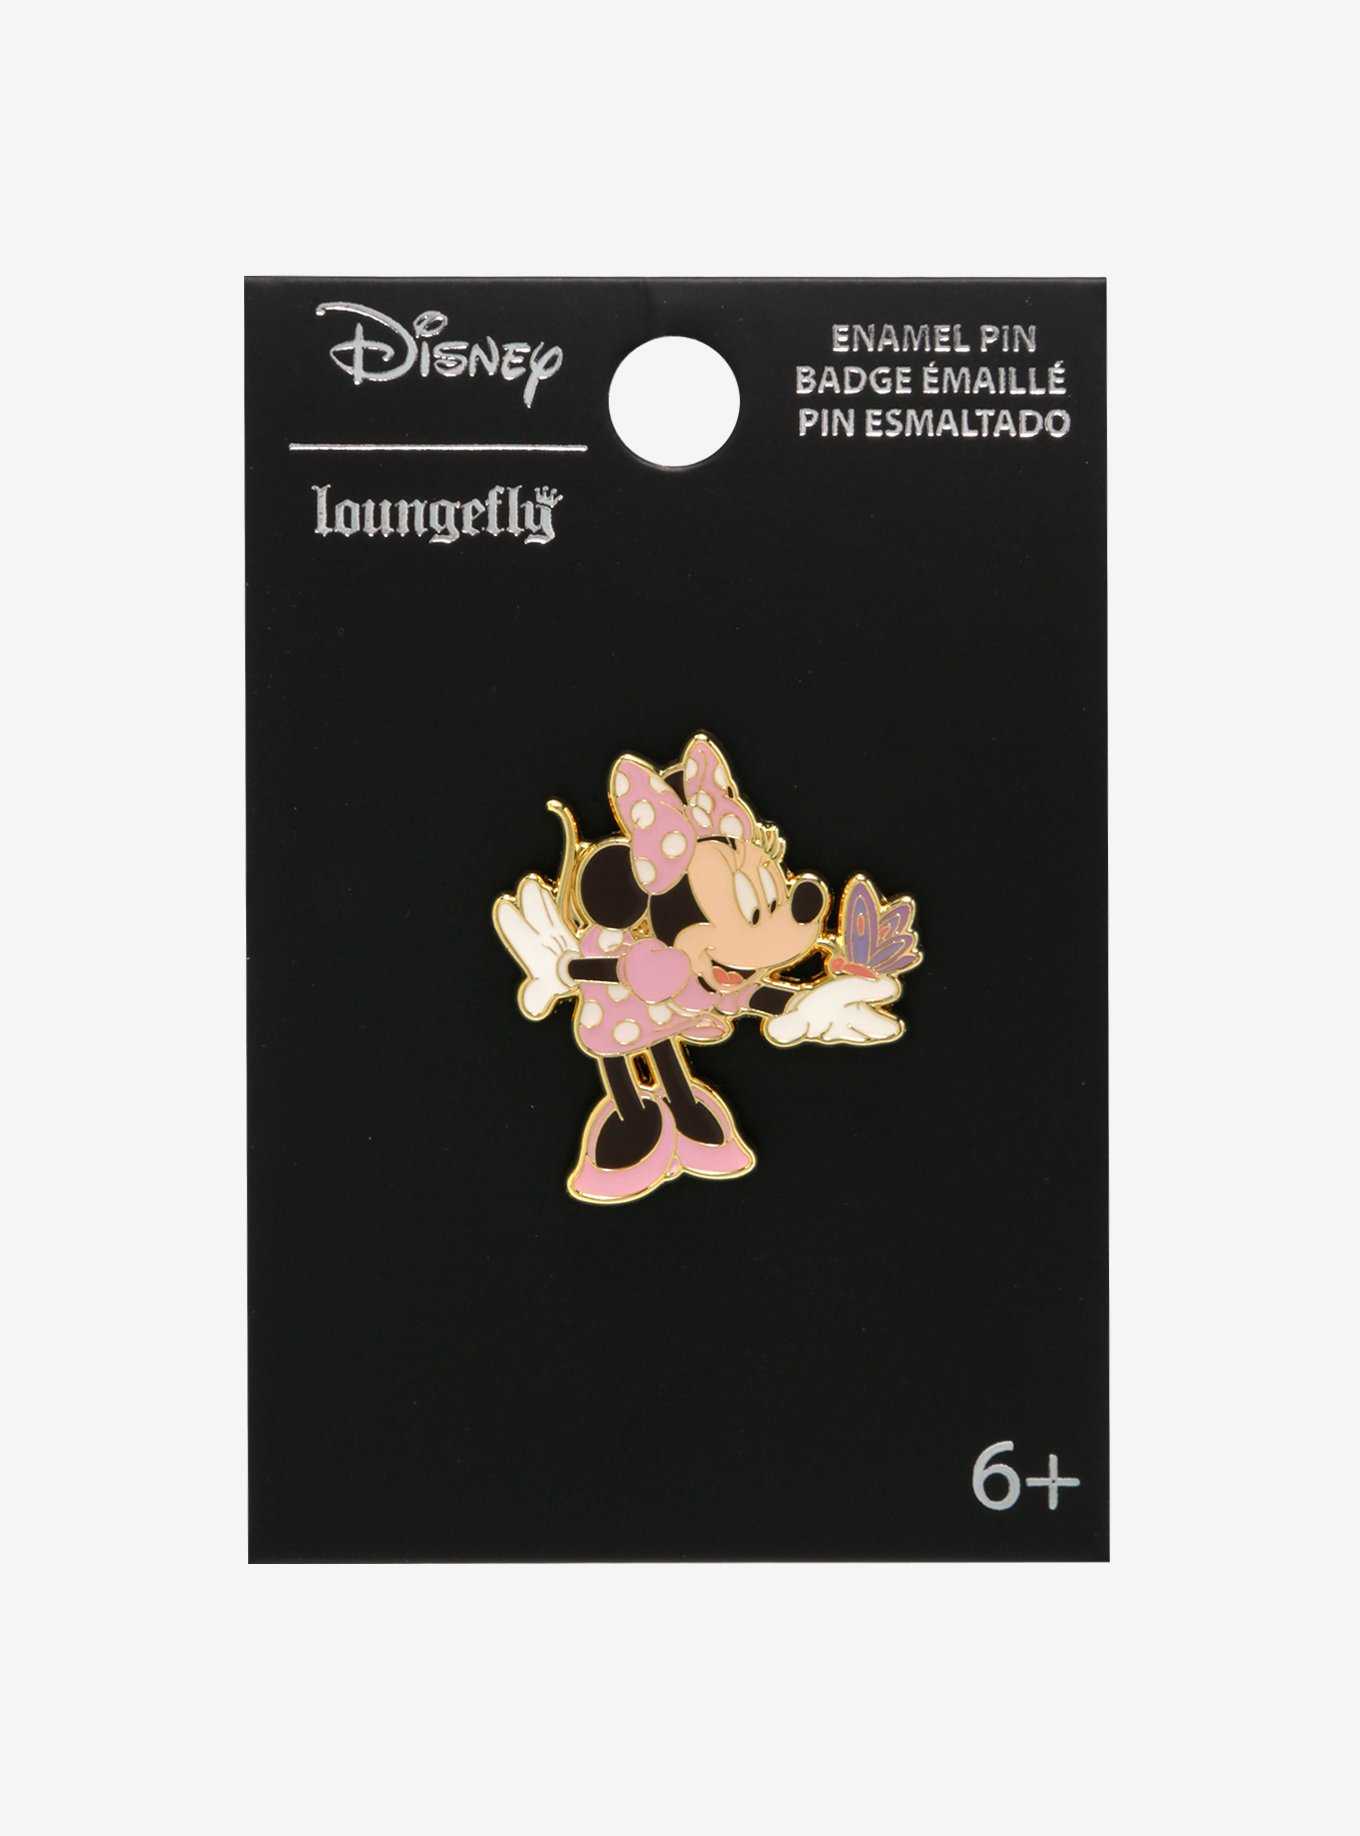 Pastel Confetti Minnie Badge Reel | Disney badge holder | badge clip |  Disney world | Disneyland | nurse | teacher